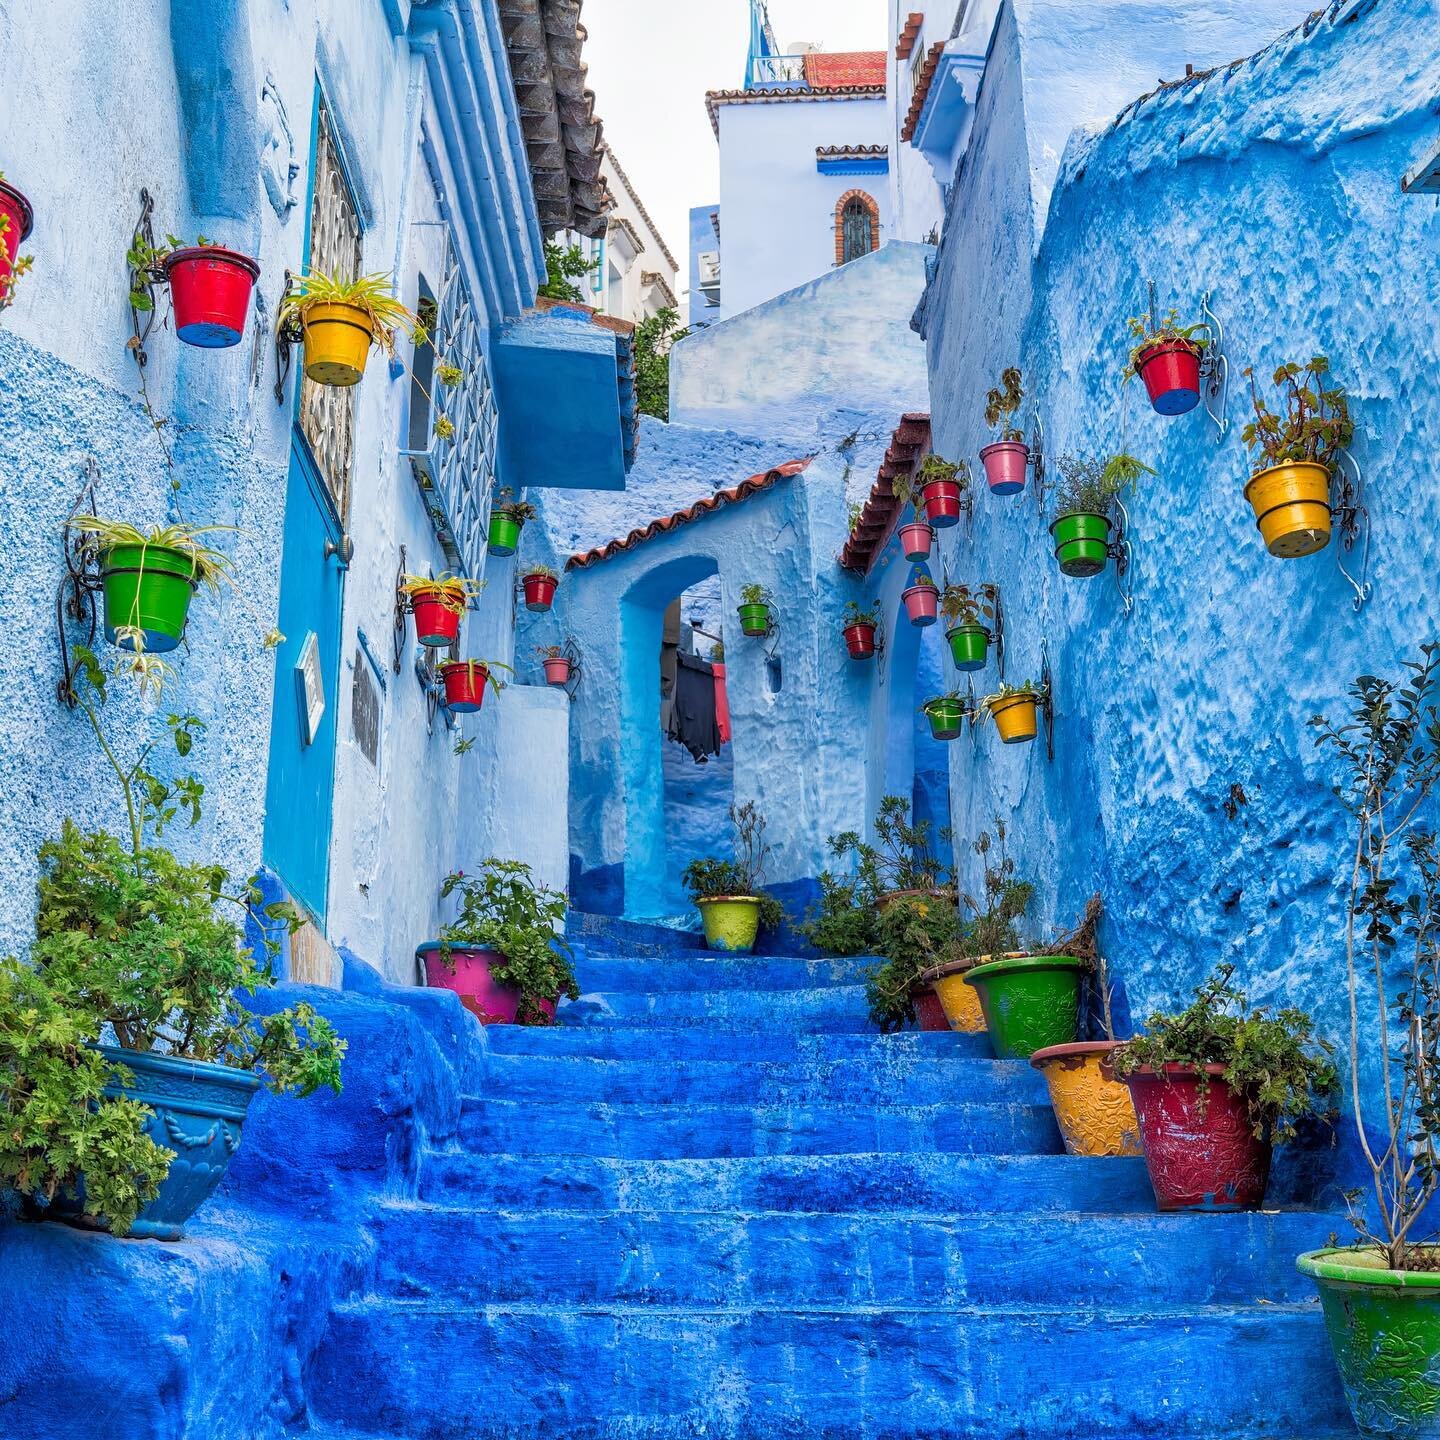 The Blue City 💙 via Milad Alizadeh